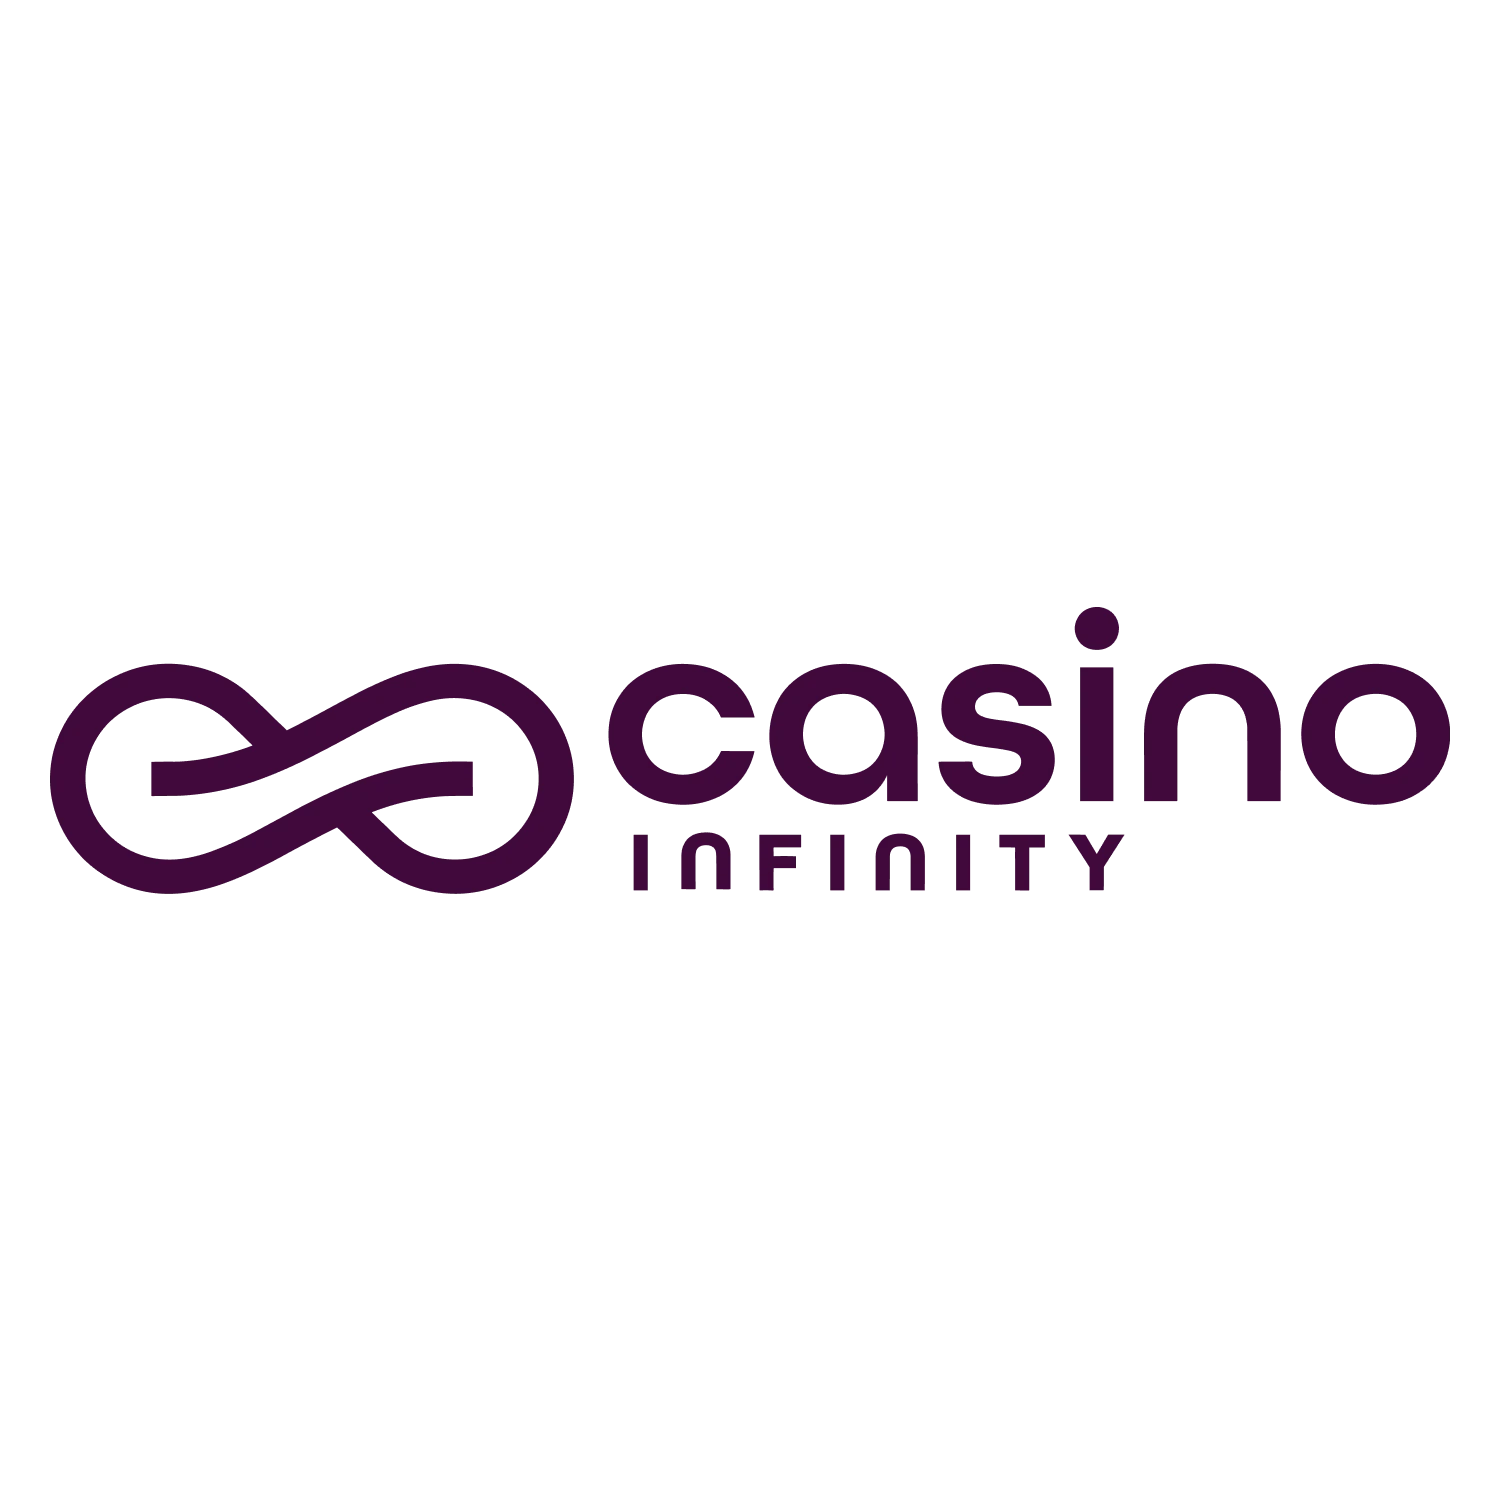 Infinity Casino has many casino games, try playing.